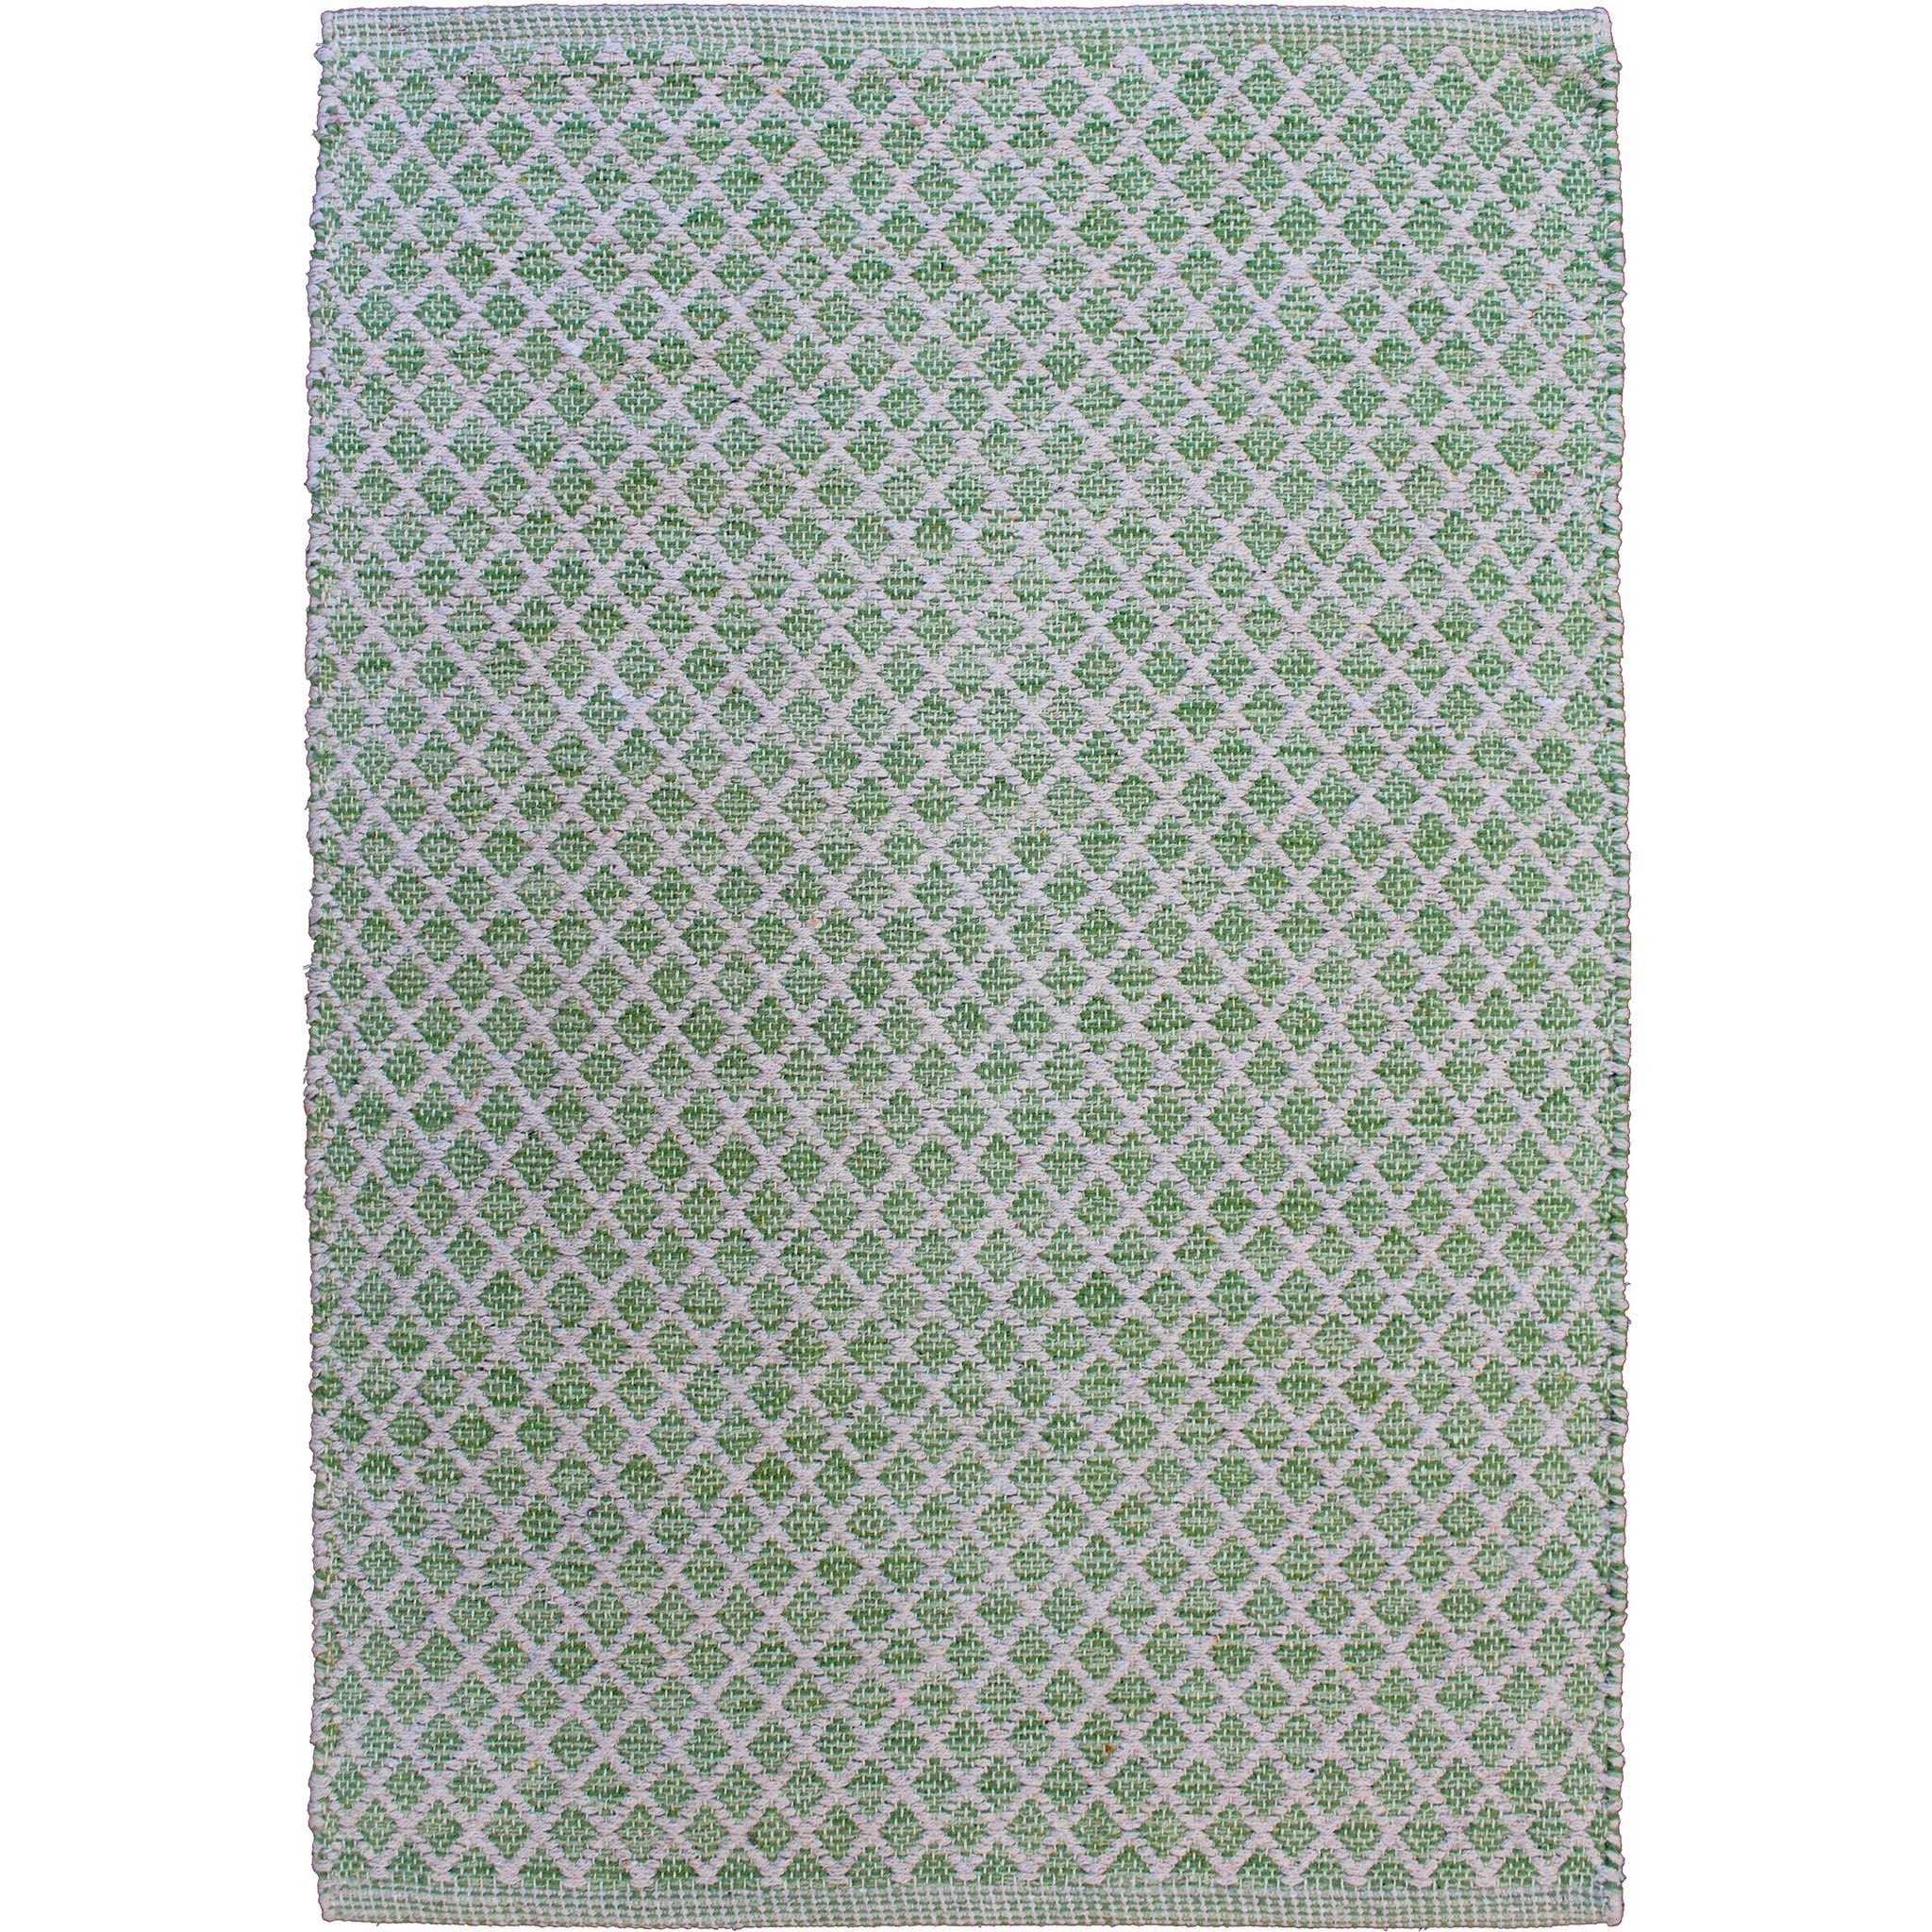 Cotton rug - Maywood vine green - 2x3